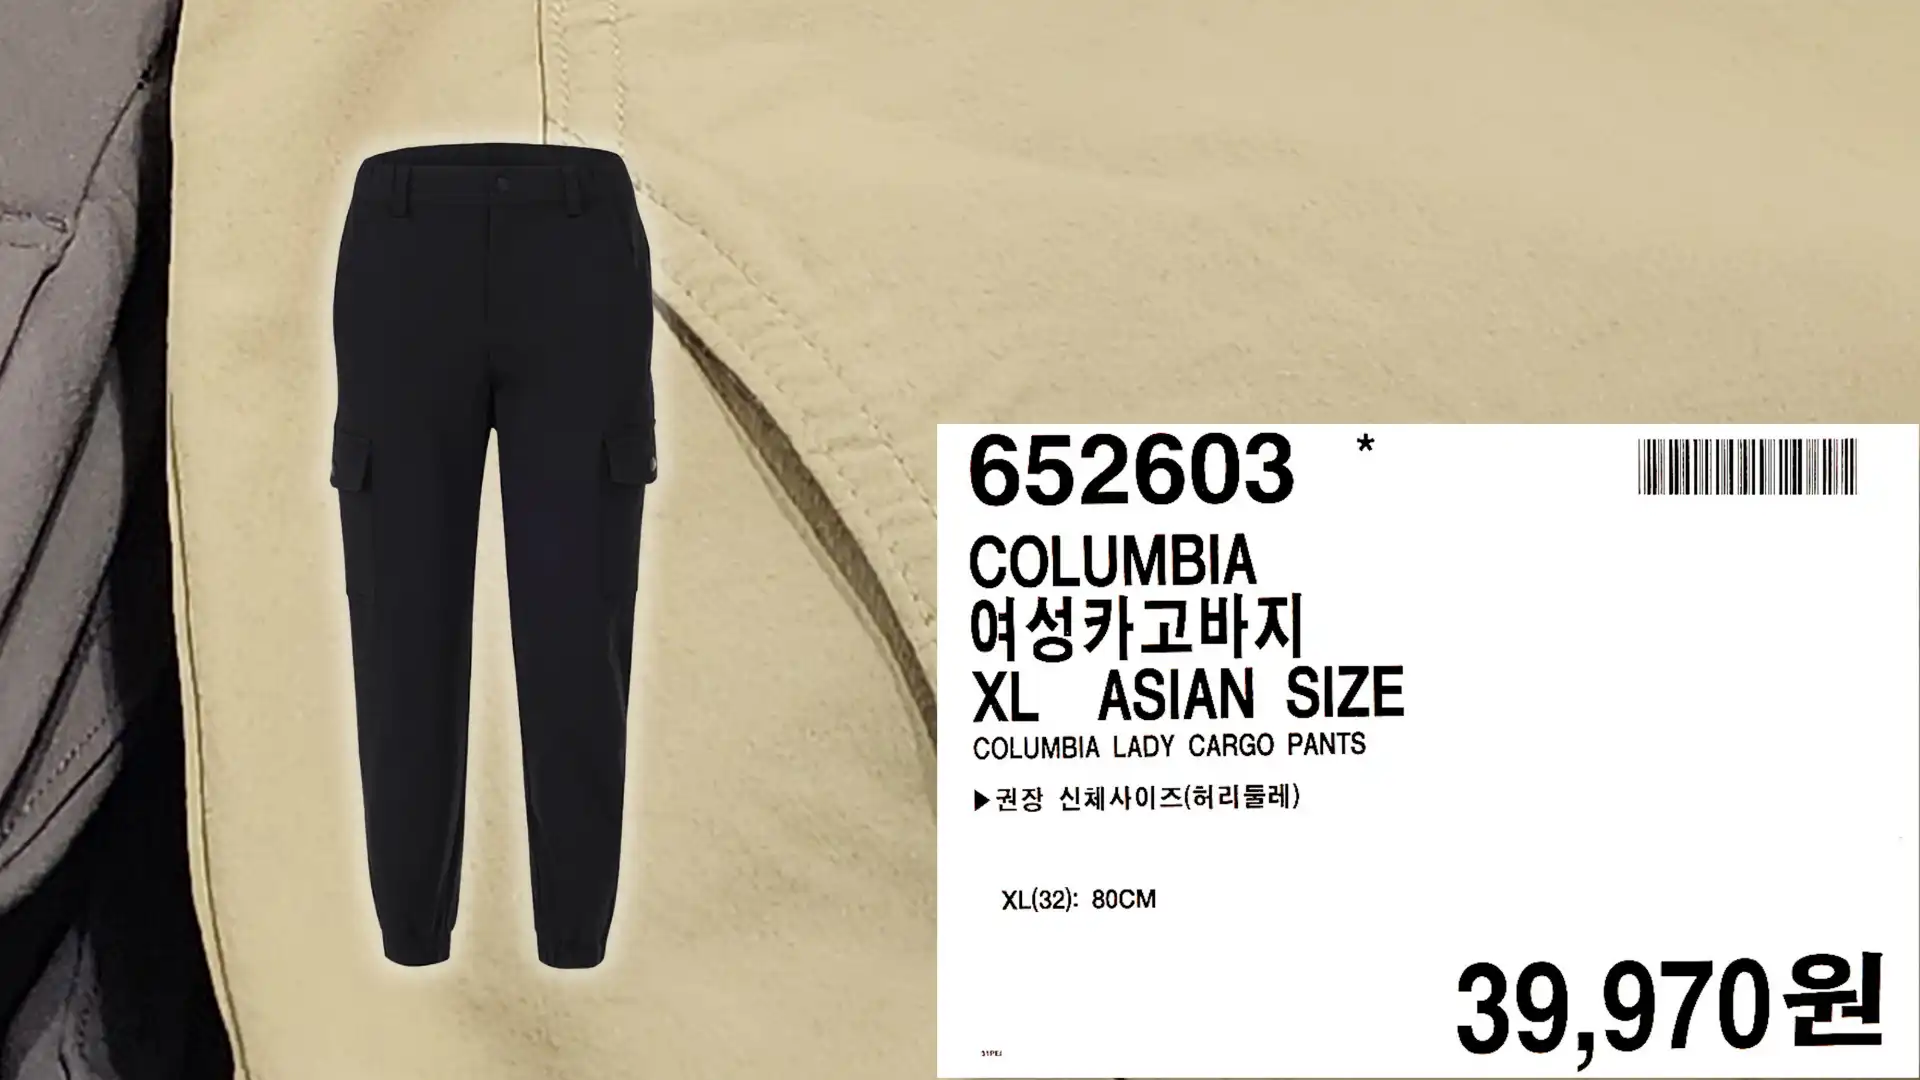 COLUMBIA
여성카고바지
XL ASIAN SIZE
COLUMBIA LADY CARGO PANTS
▶권장 신체사이즈(허리둘레)
XL(32): 80CM
39&#44;970원